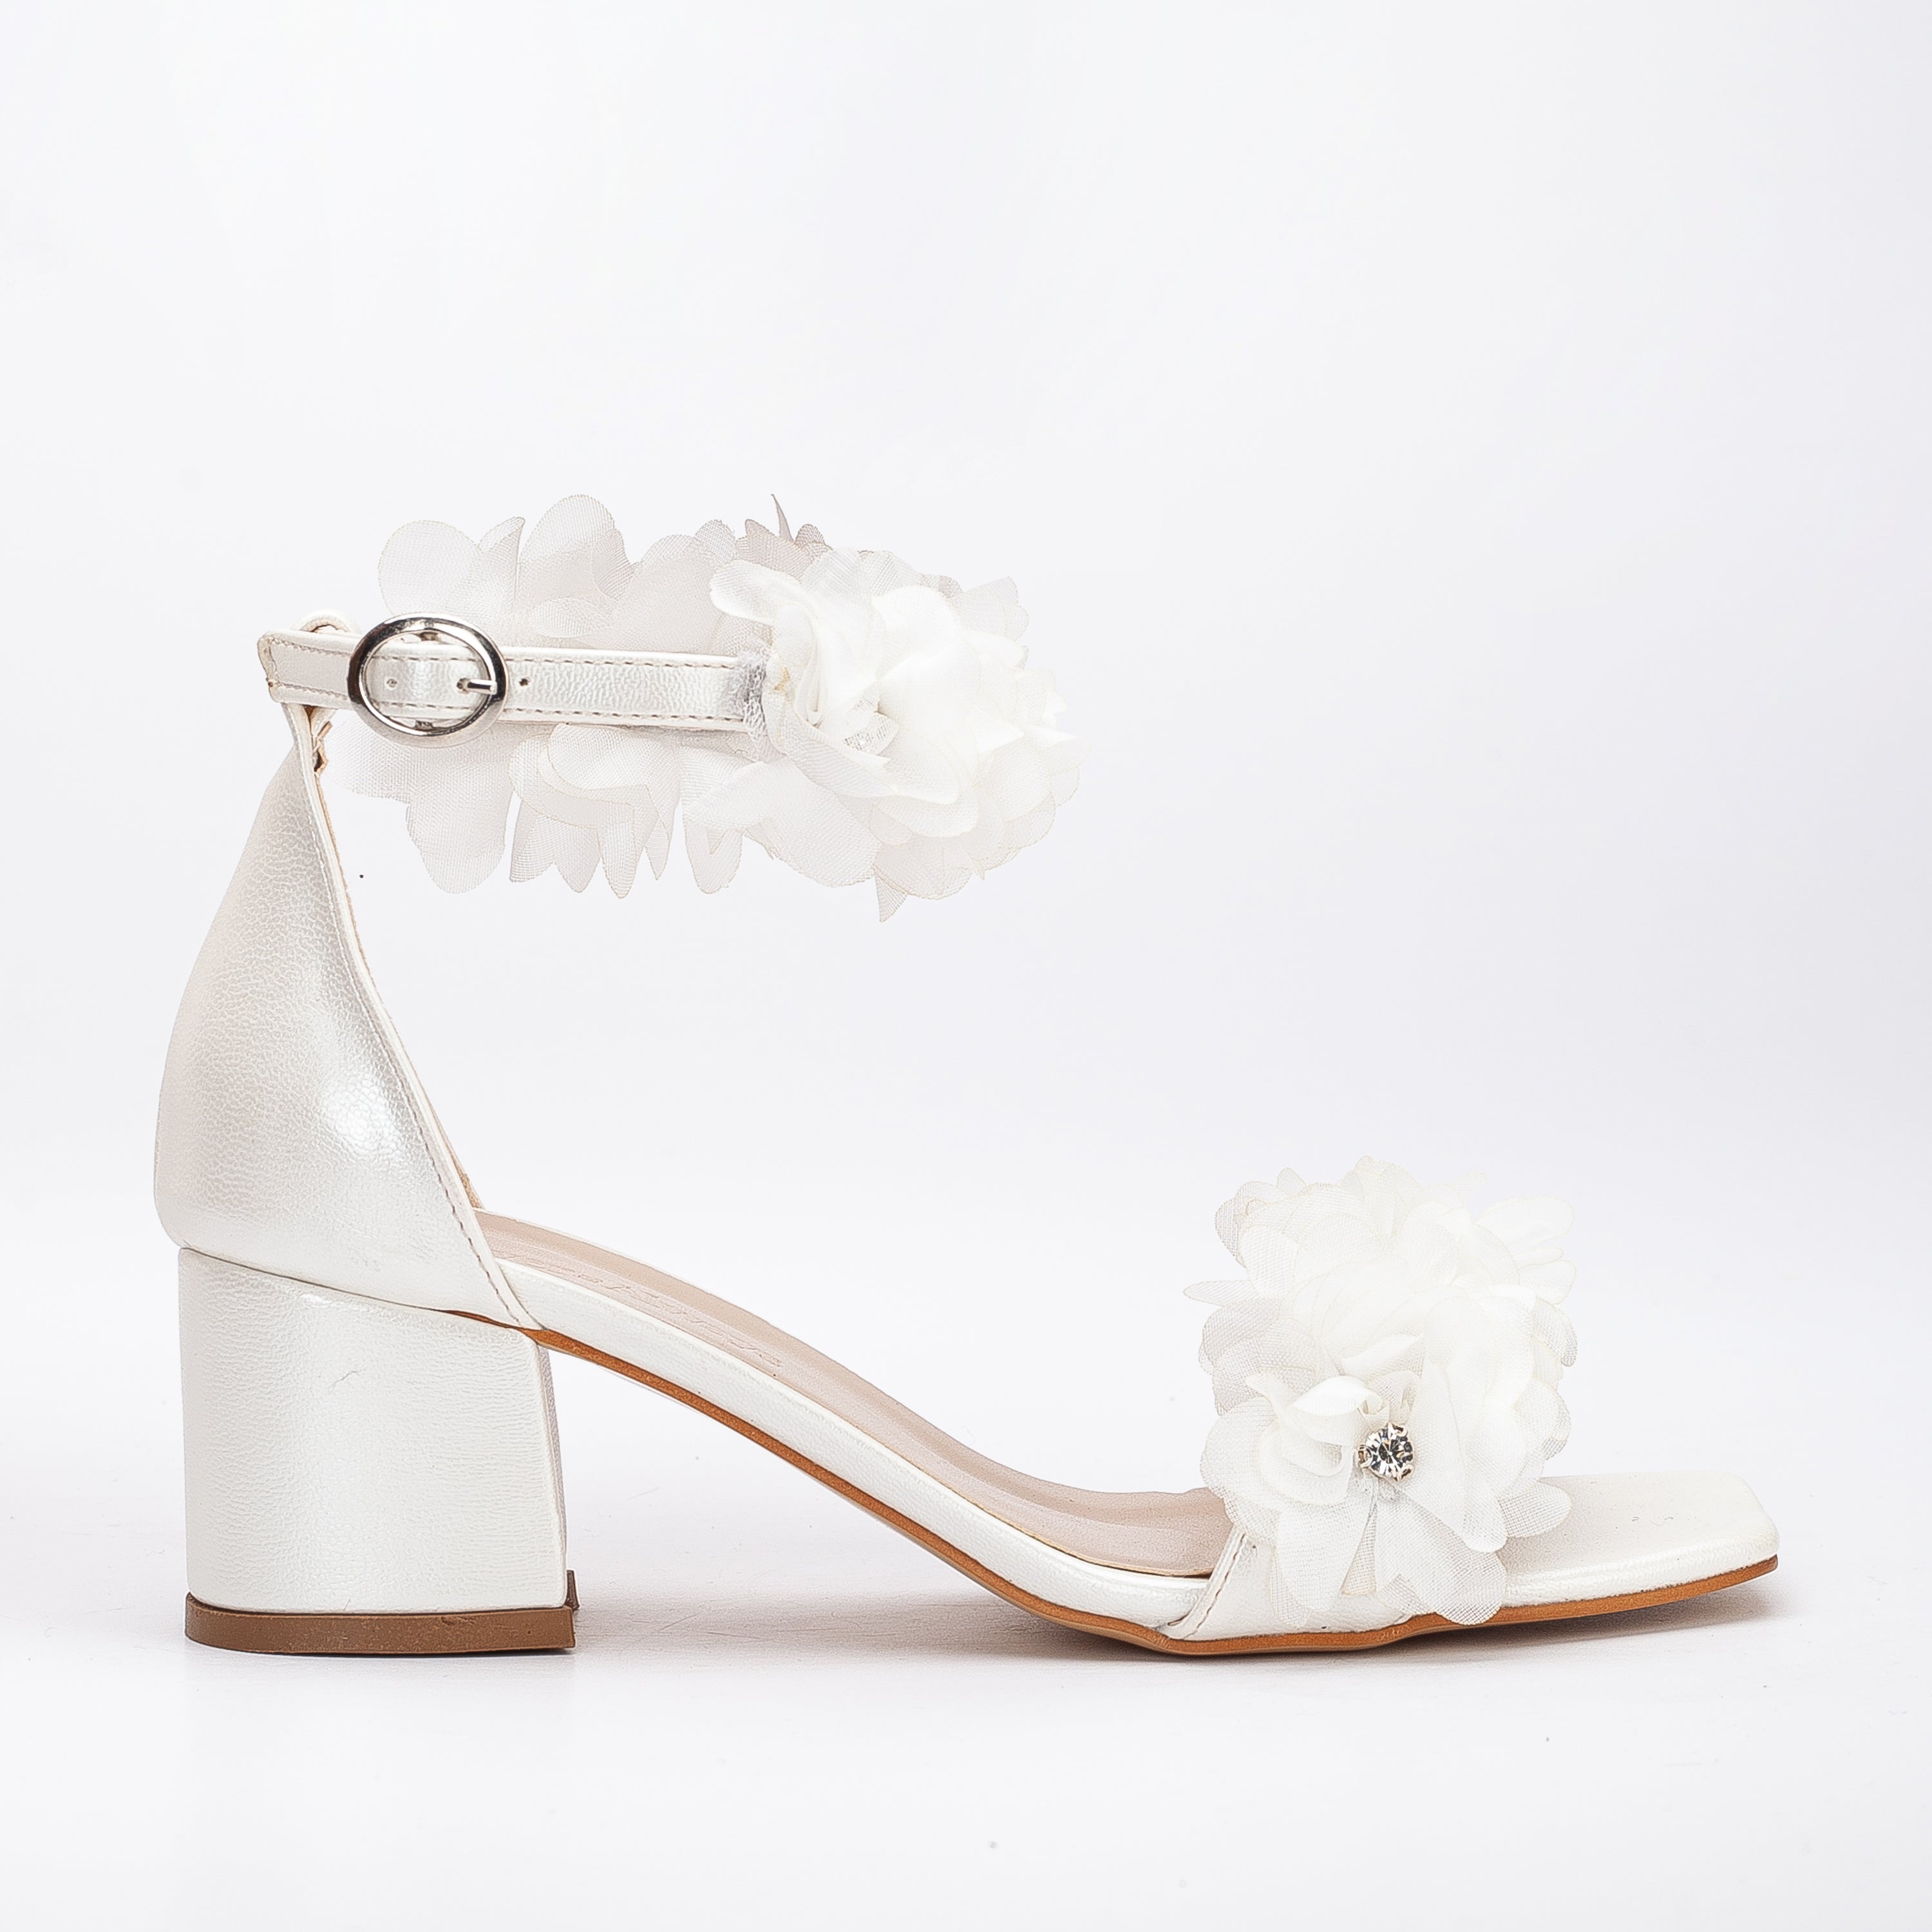 Badgley Mischka | Shoes | Badgley Mischka Alison Embellished Block Heel  Wedding Shoe Ivory | Poshmark